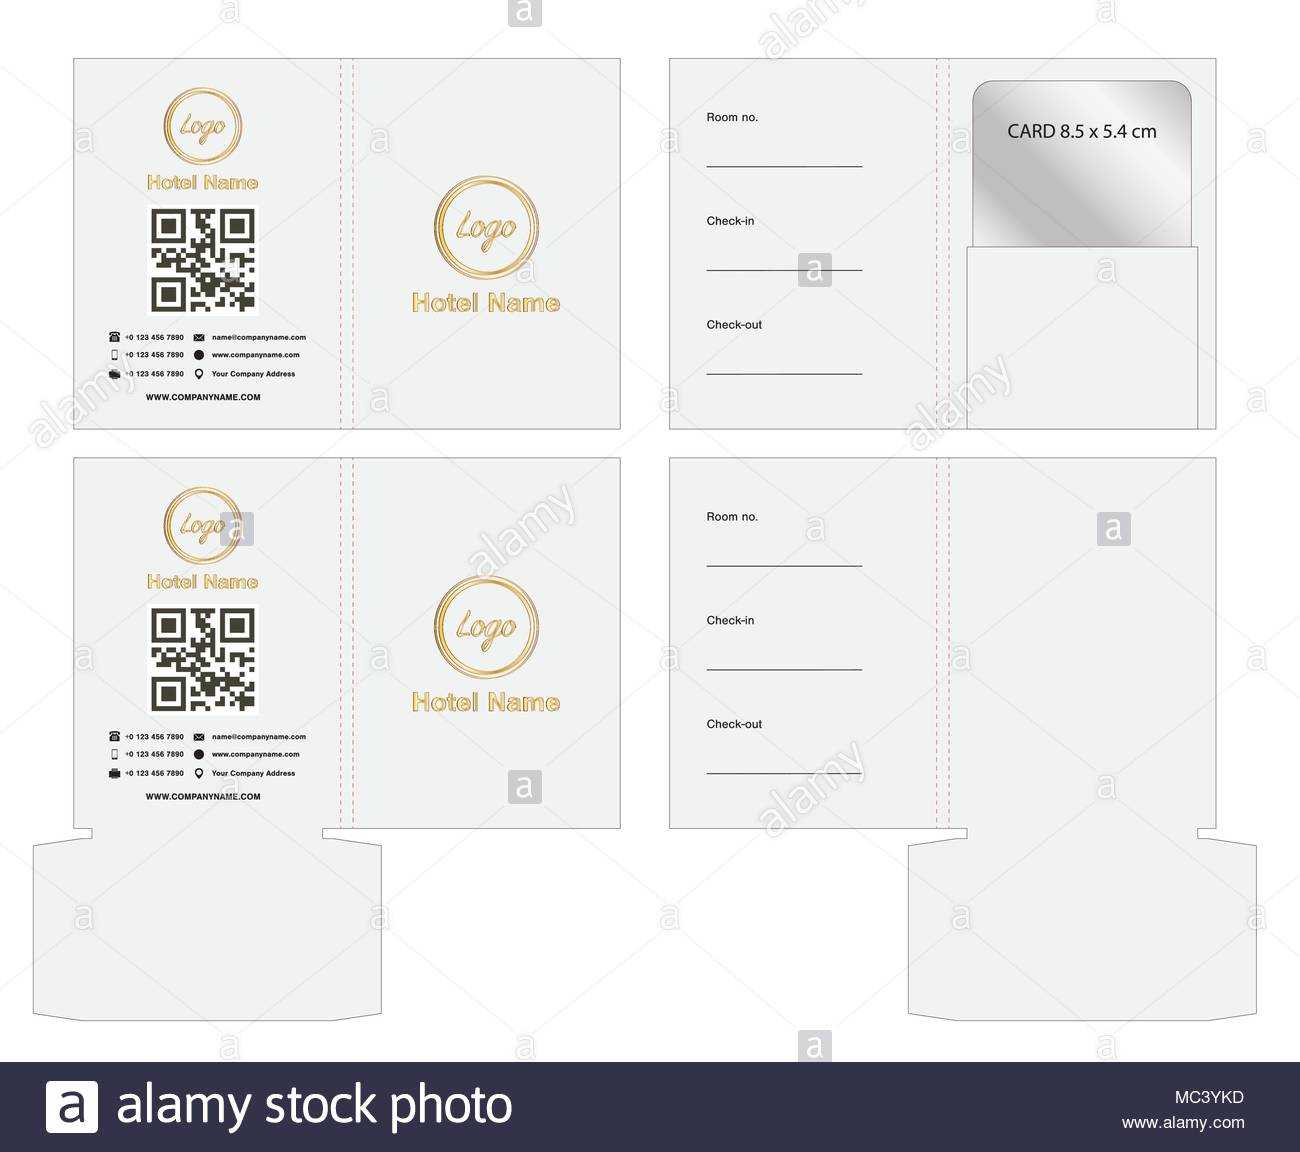 Key Card Envelope Die Cut Template Mock Up Illustration Intended For Hotel Key Card Template